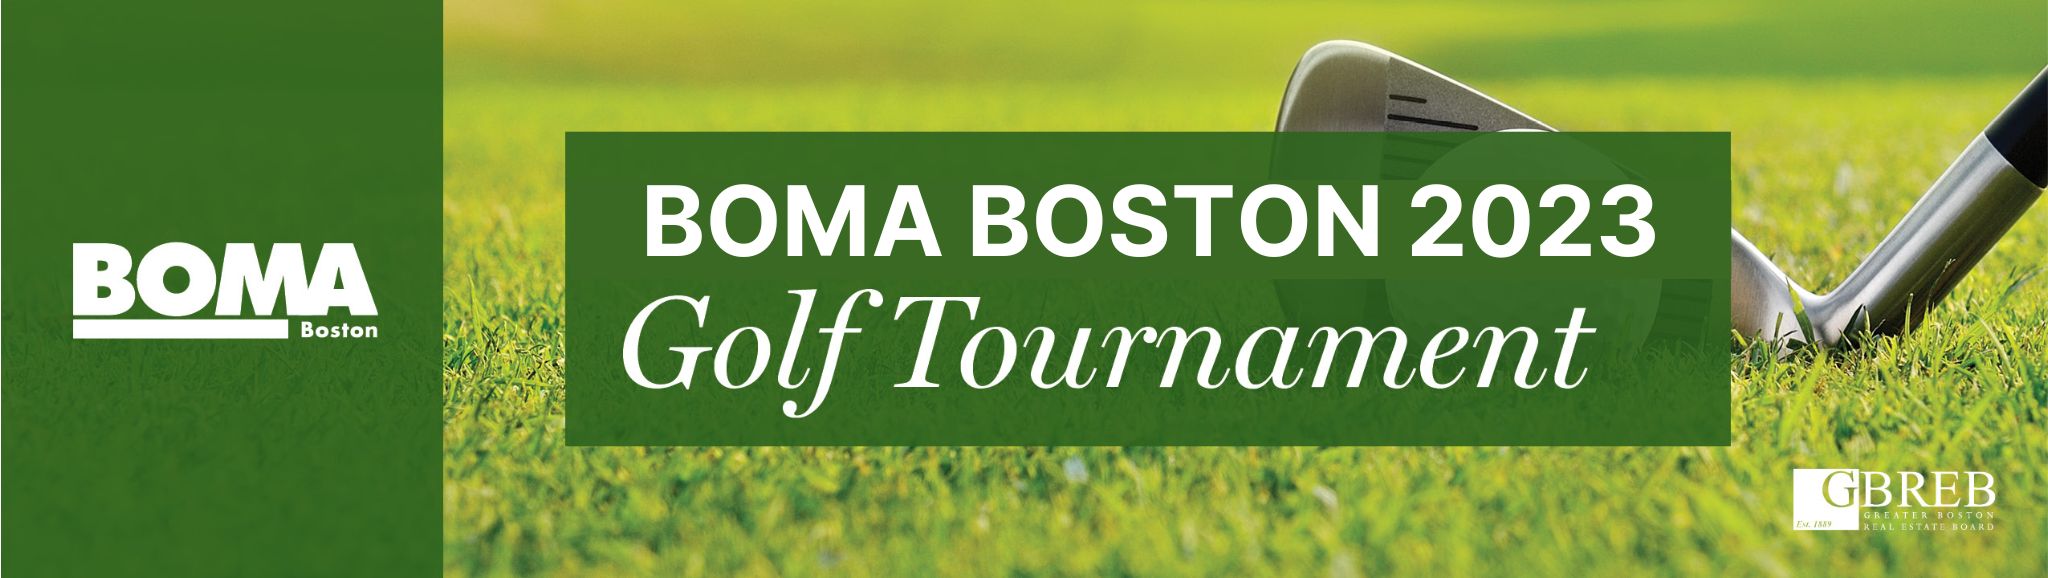 2023 BOMA Golf Tournament